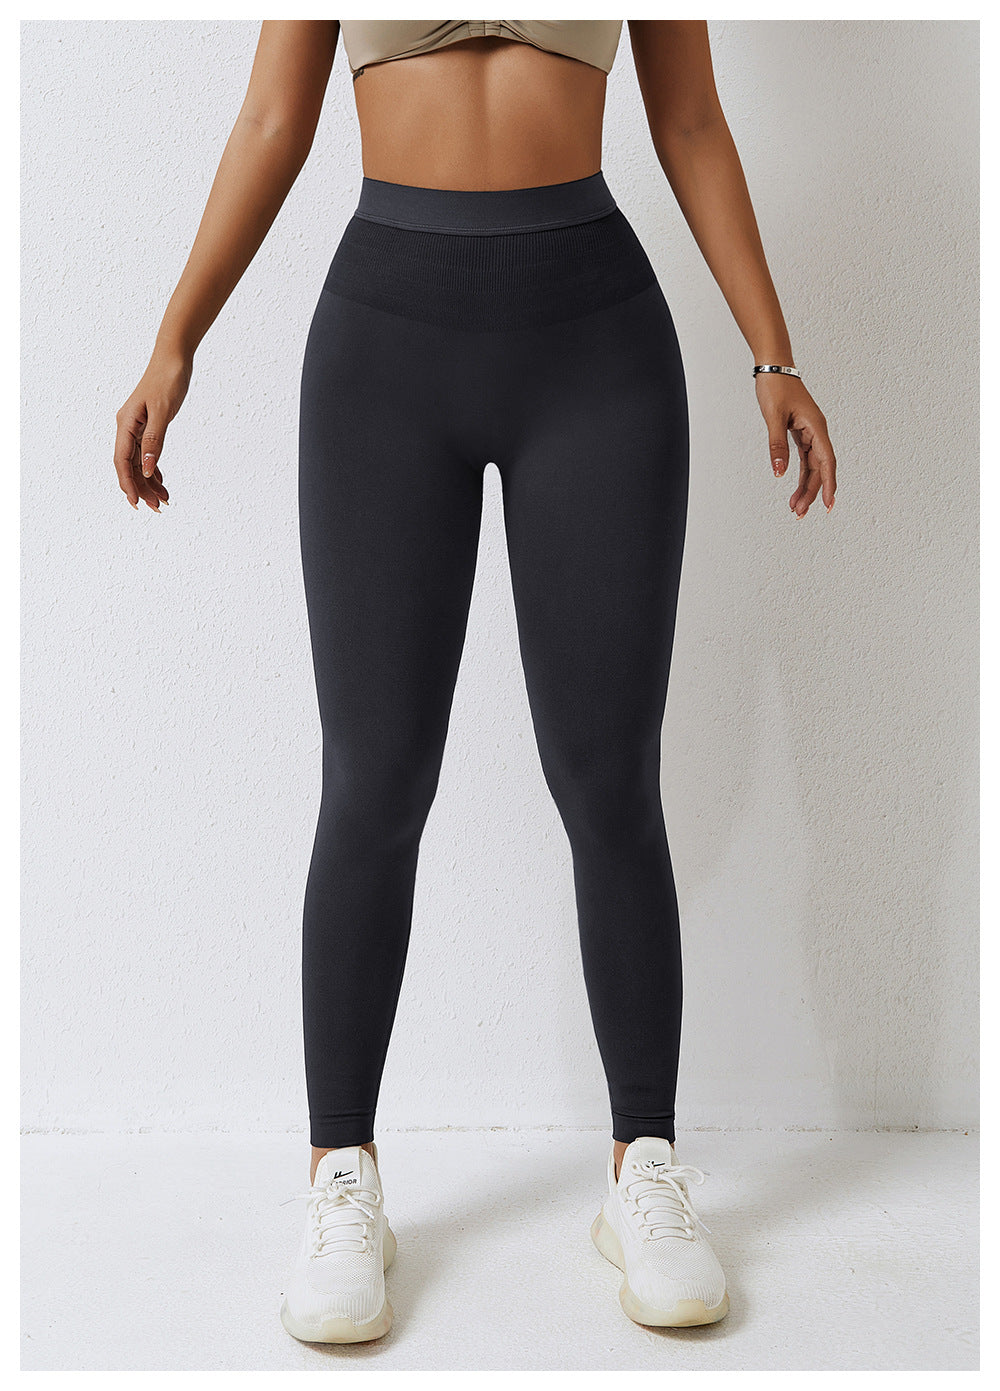 High waist seamless yoga pants women's outerwear running training tights sports pants high waist hip lifting fitness trousers 6742